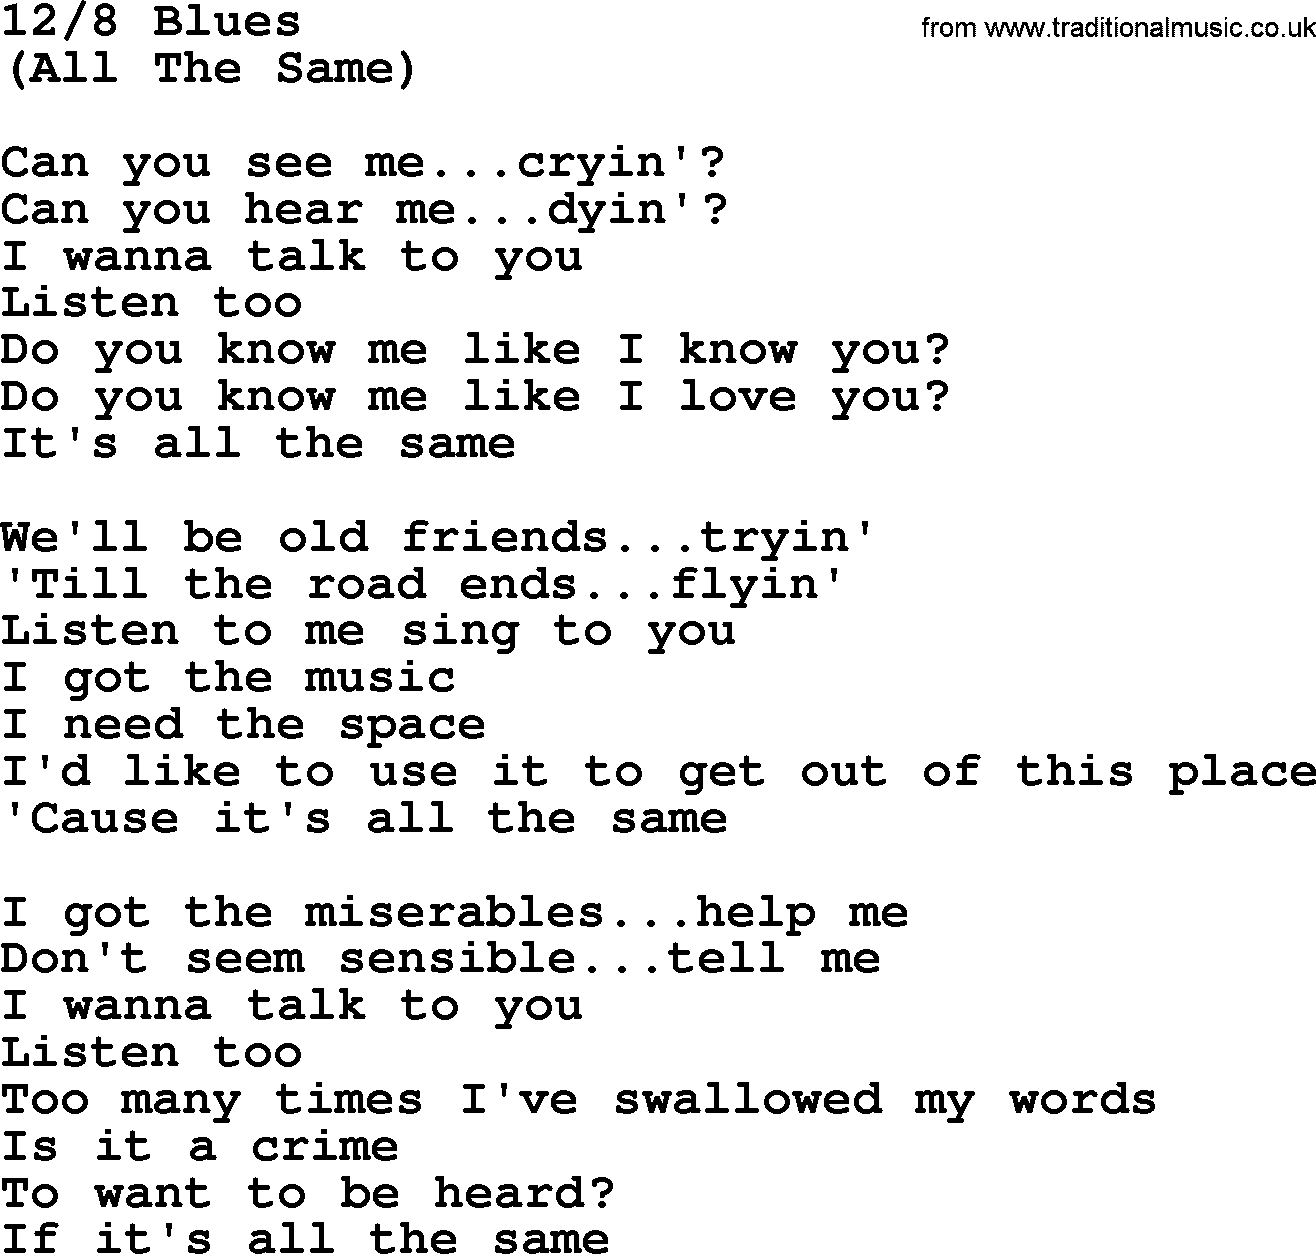 The Byrds song 12 8 Blues, lyrics